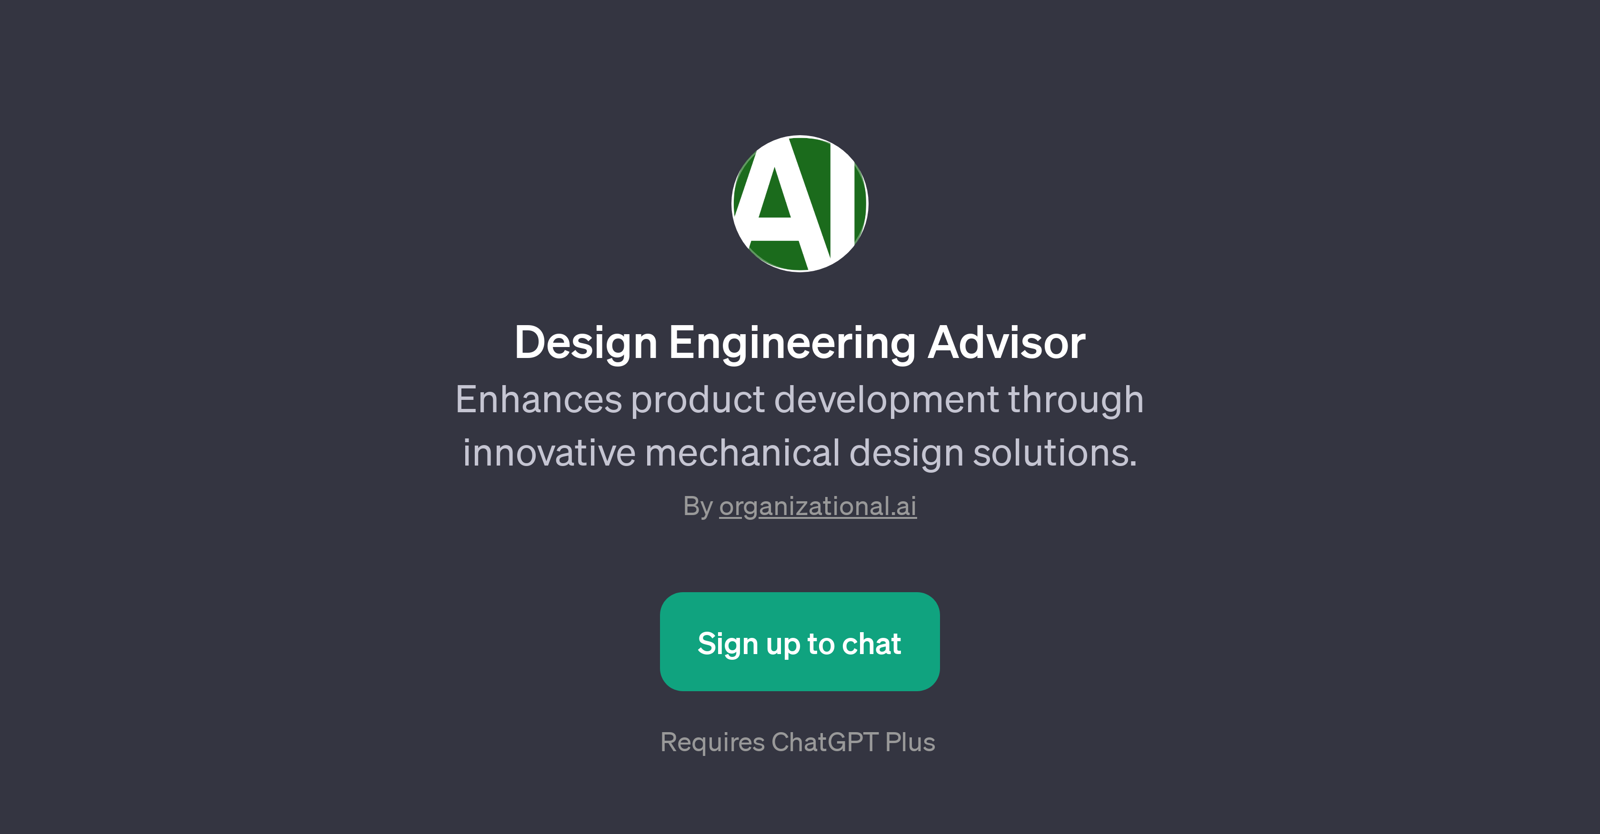 Design Engineering Advisor website